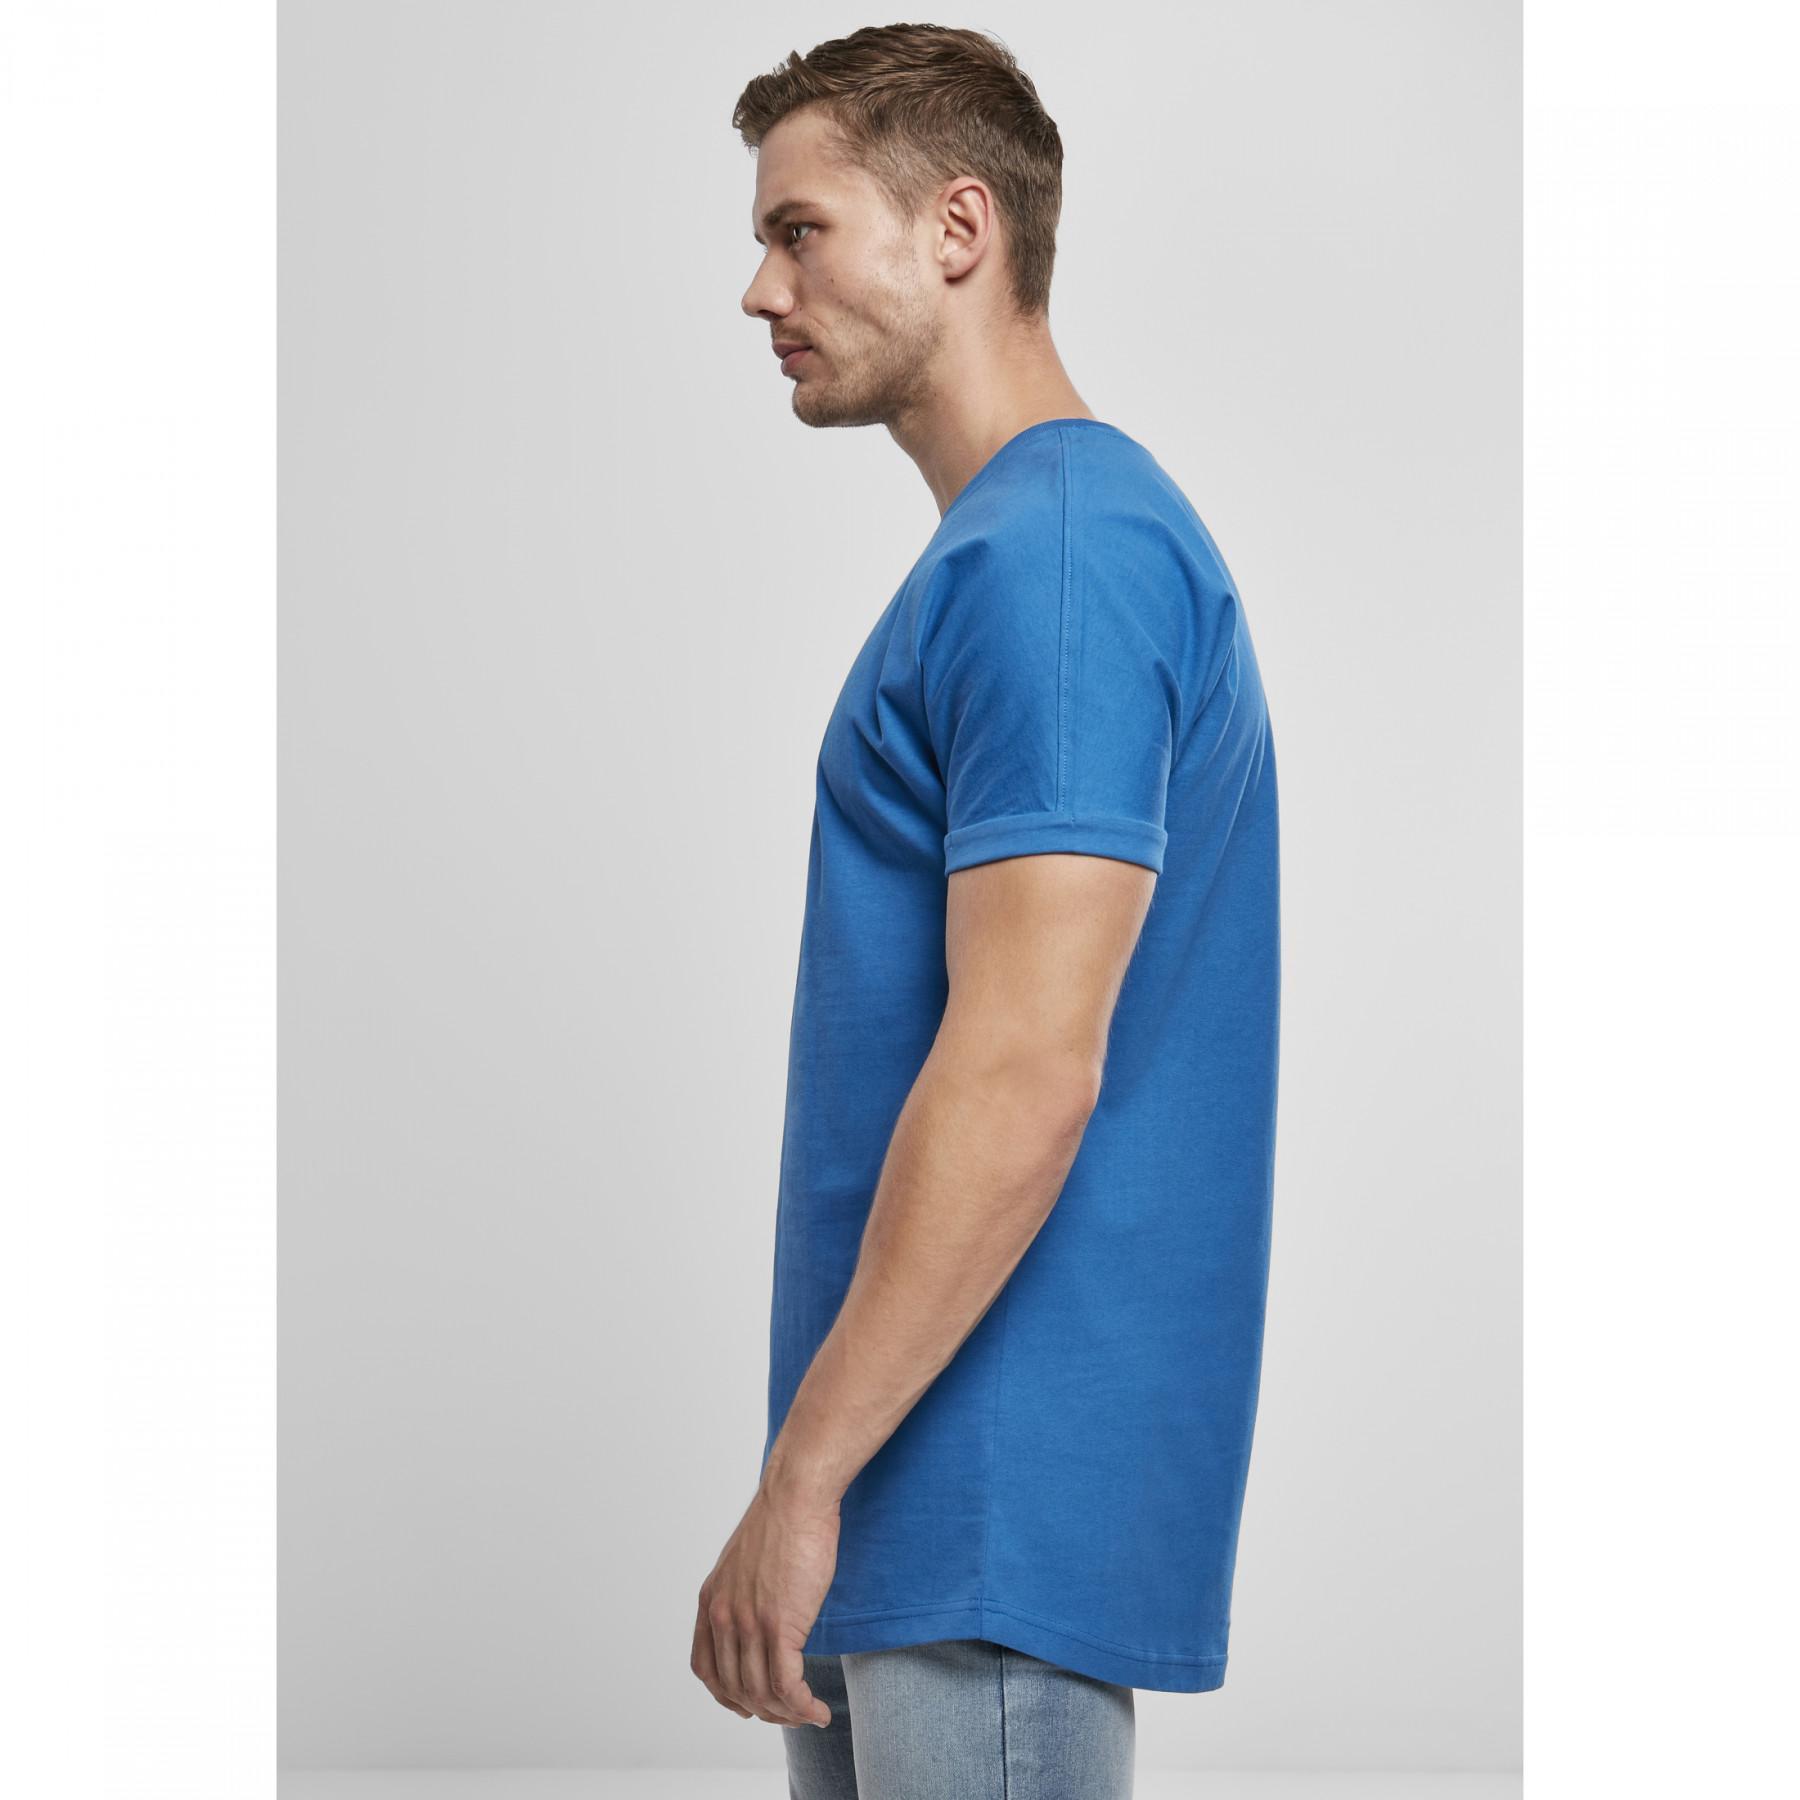 T-shirt Urban - Lifestyle - Tee Long and Turnup Shaped T-shirts - Man Classics shirts Polo